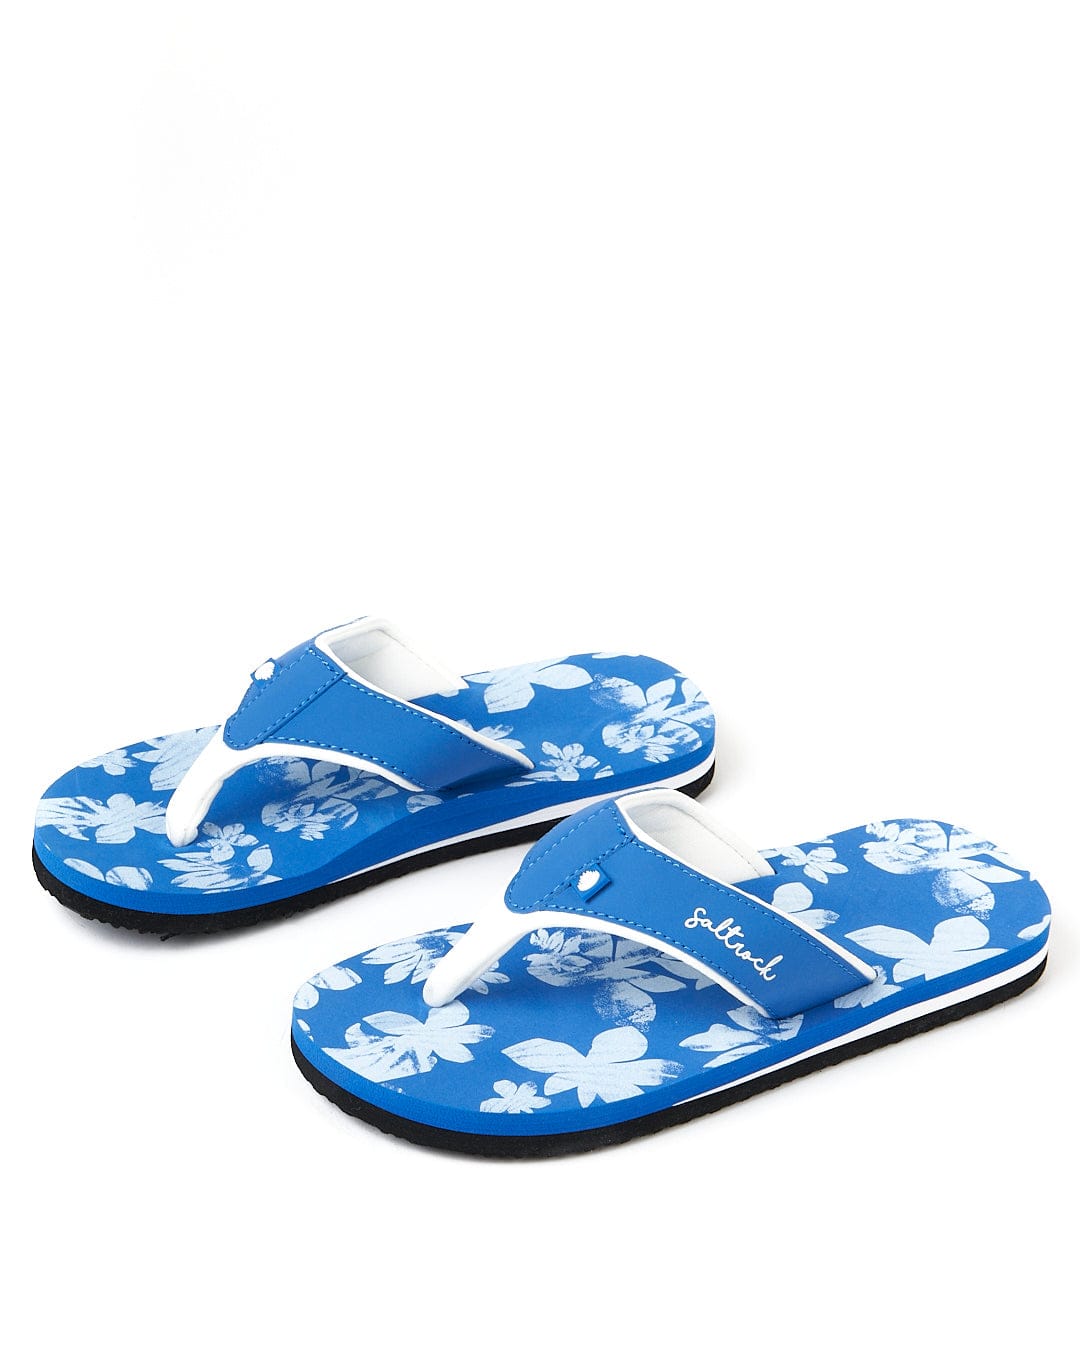 A pair of blue and white Saltrock Floral - Womens Flip Flops - Blue flip flops.